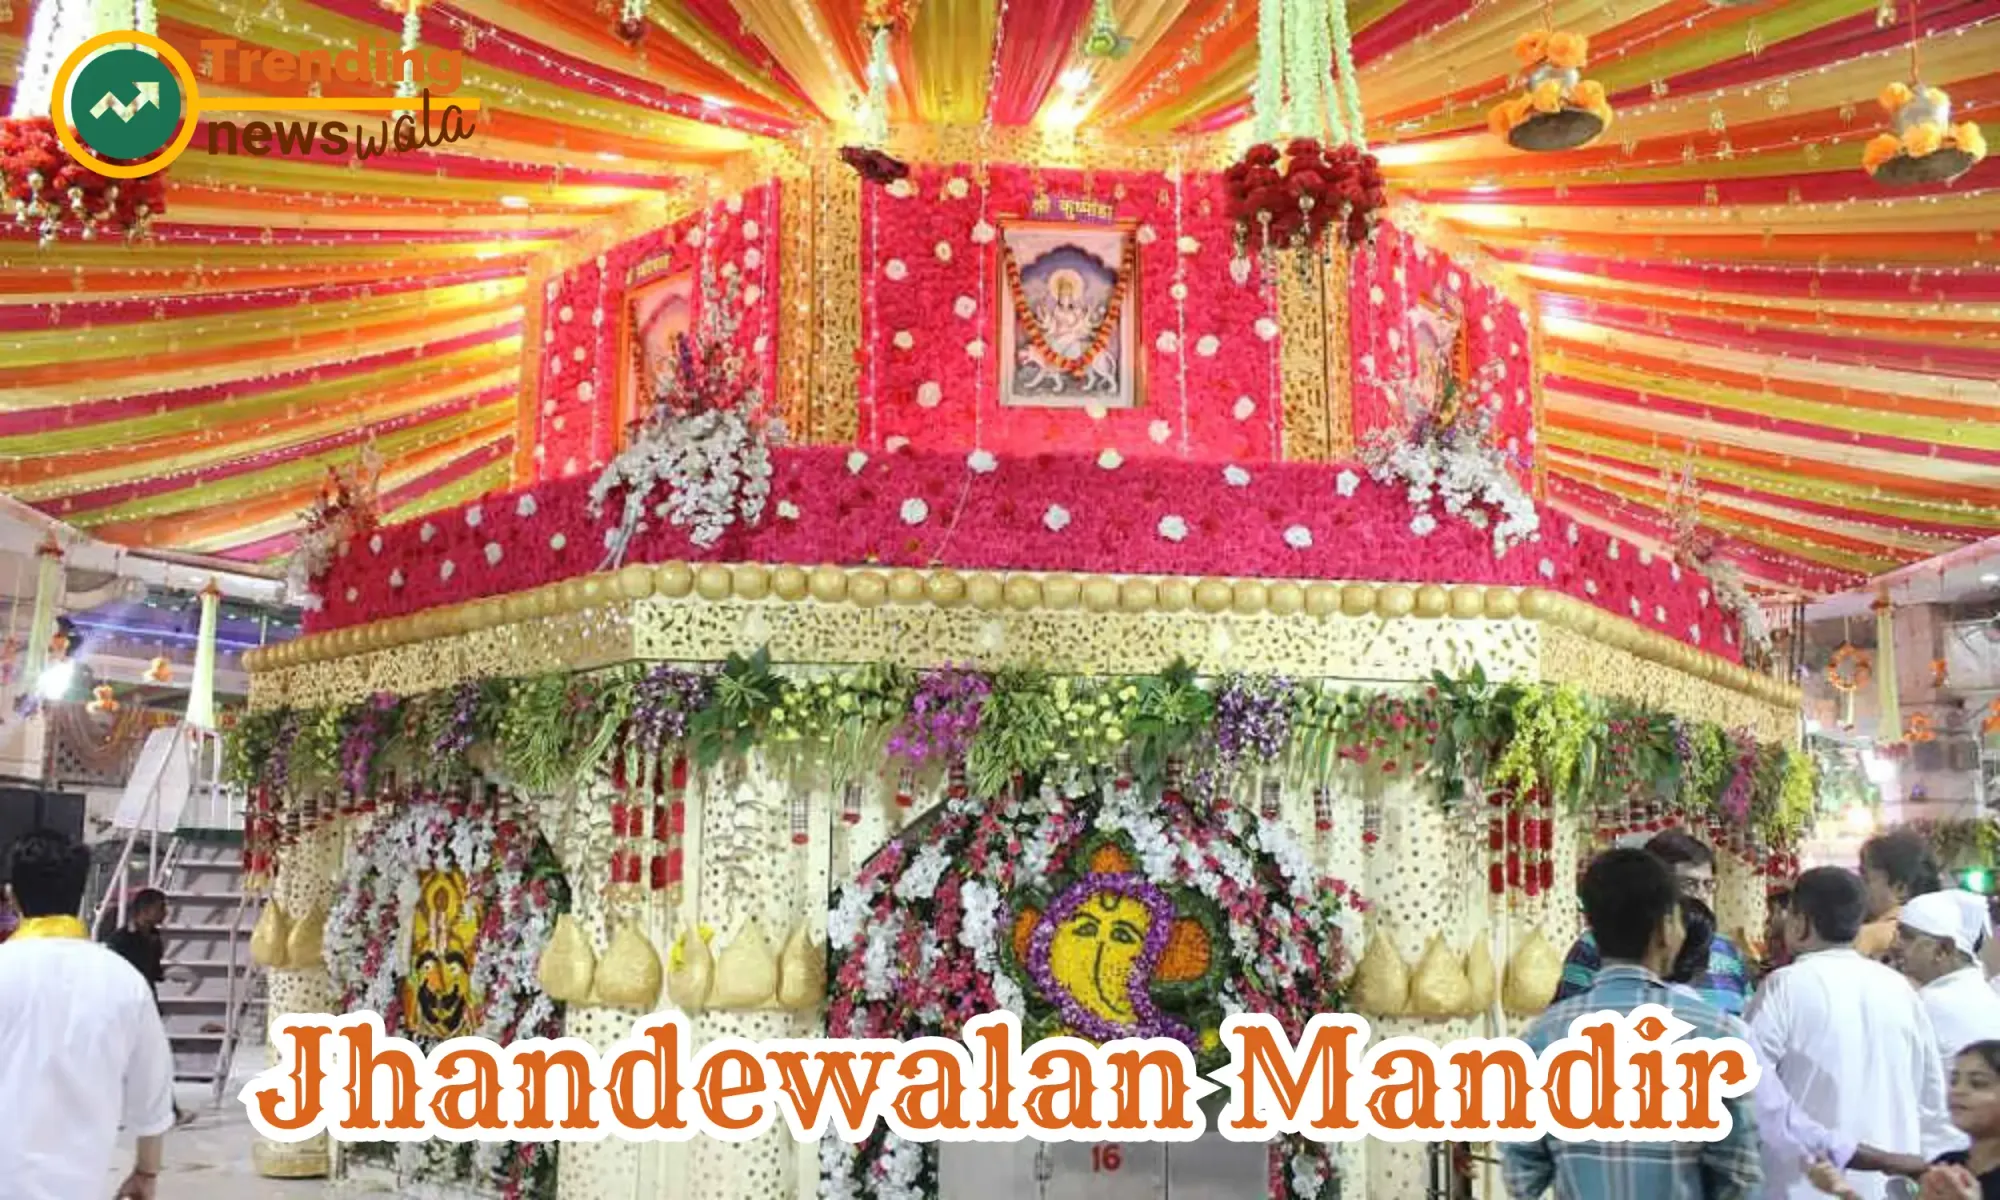 The Jhandewalan Mandir, also known as the Jhandewala Temple, is an ancient Hindu temple